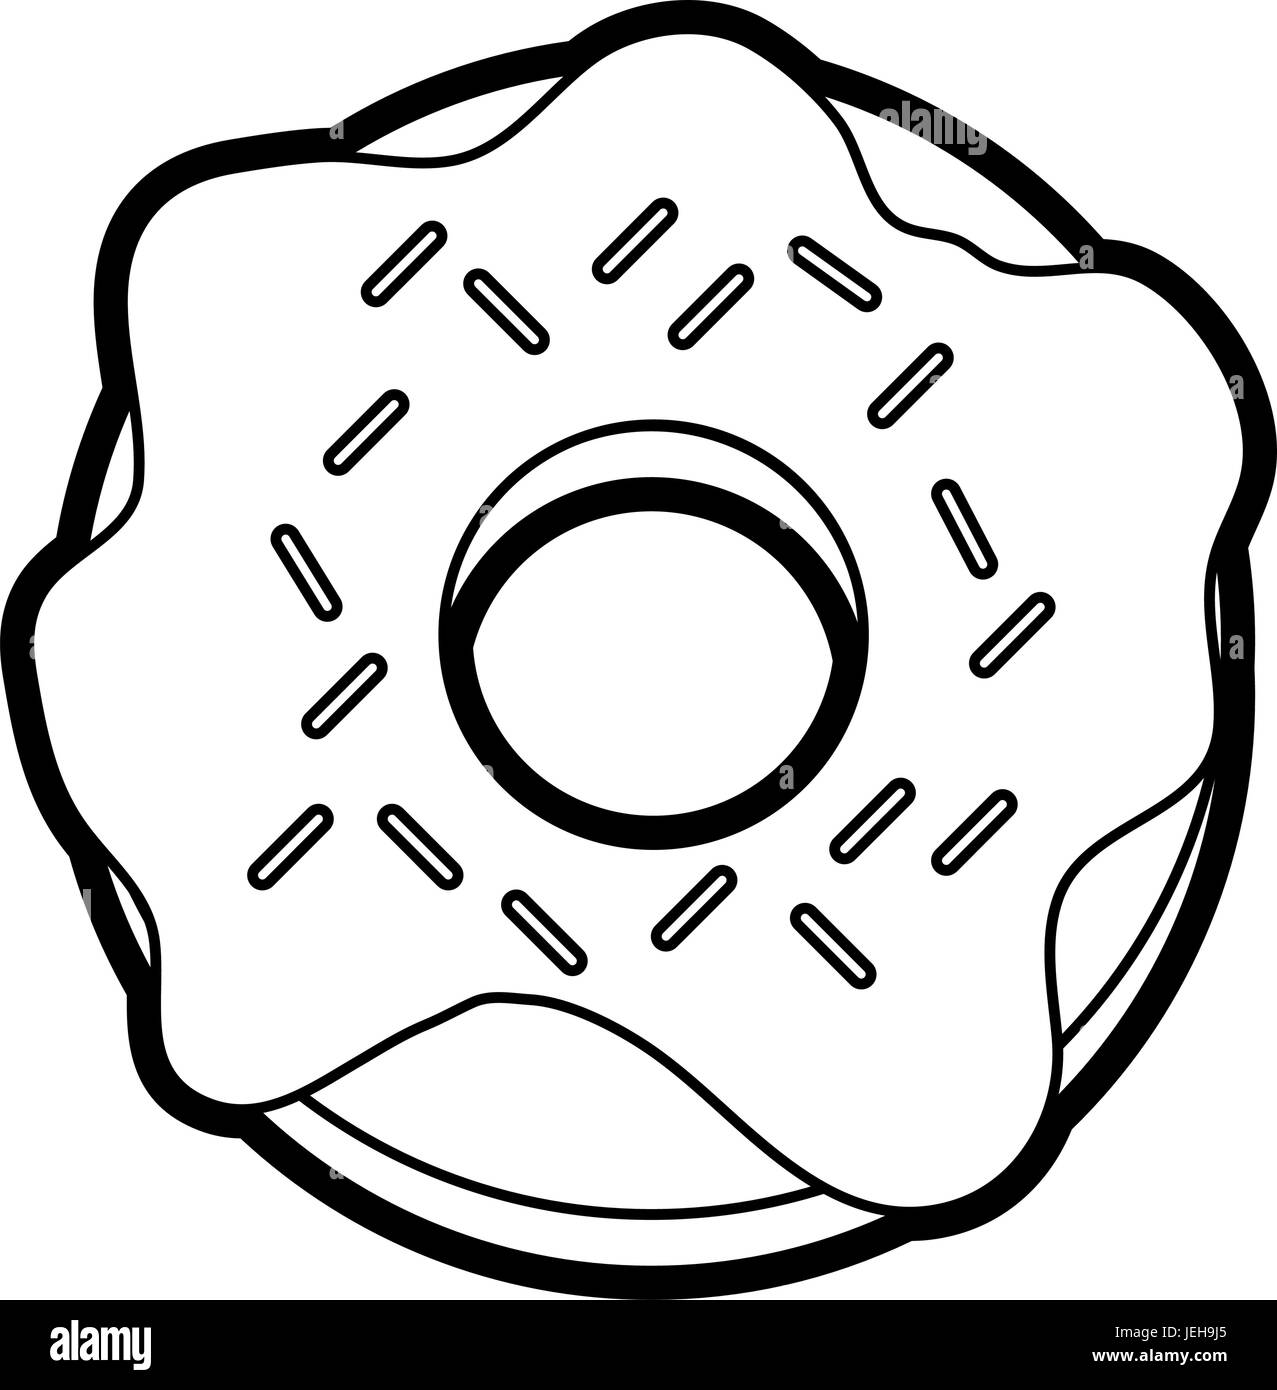 Symbol Donut Black and White Stock Photos & Images - Alamy